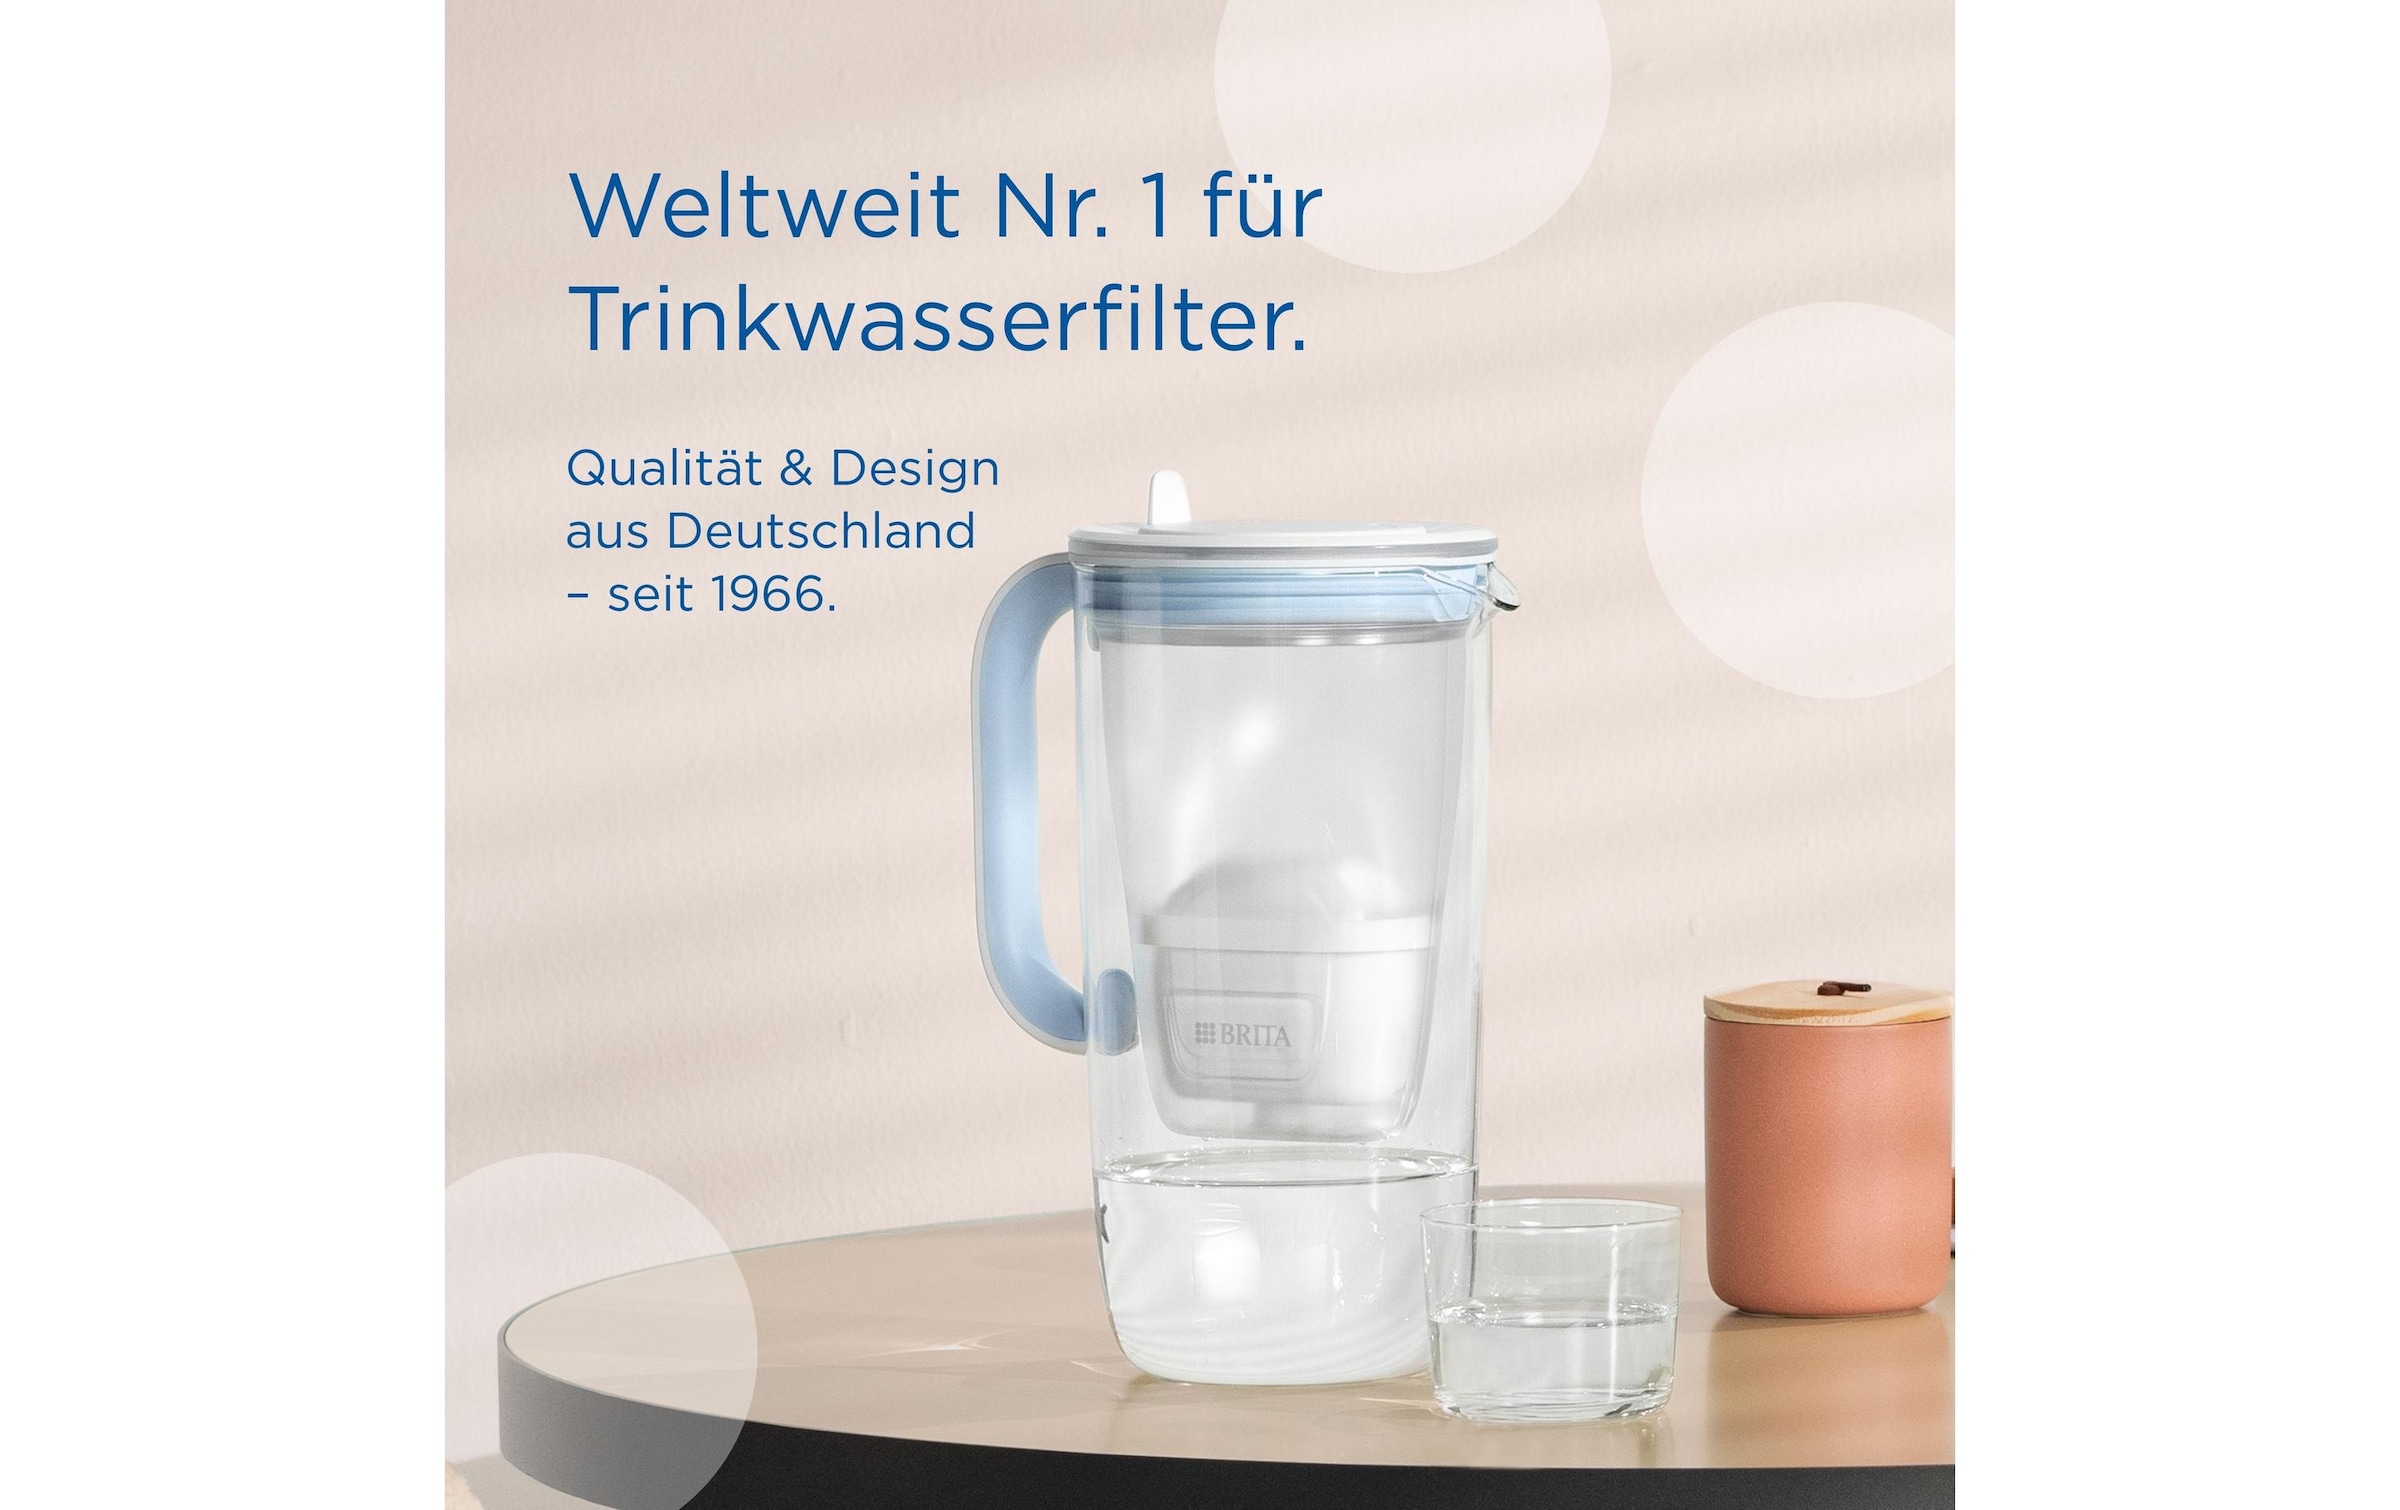 BRITA Wasserfilter »Maxtra Pro Extra Kalkschutz, 6er Pack«, (6 tlg.)